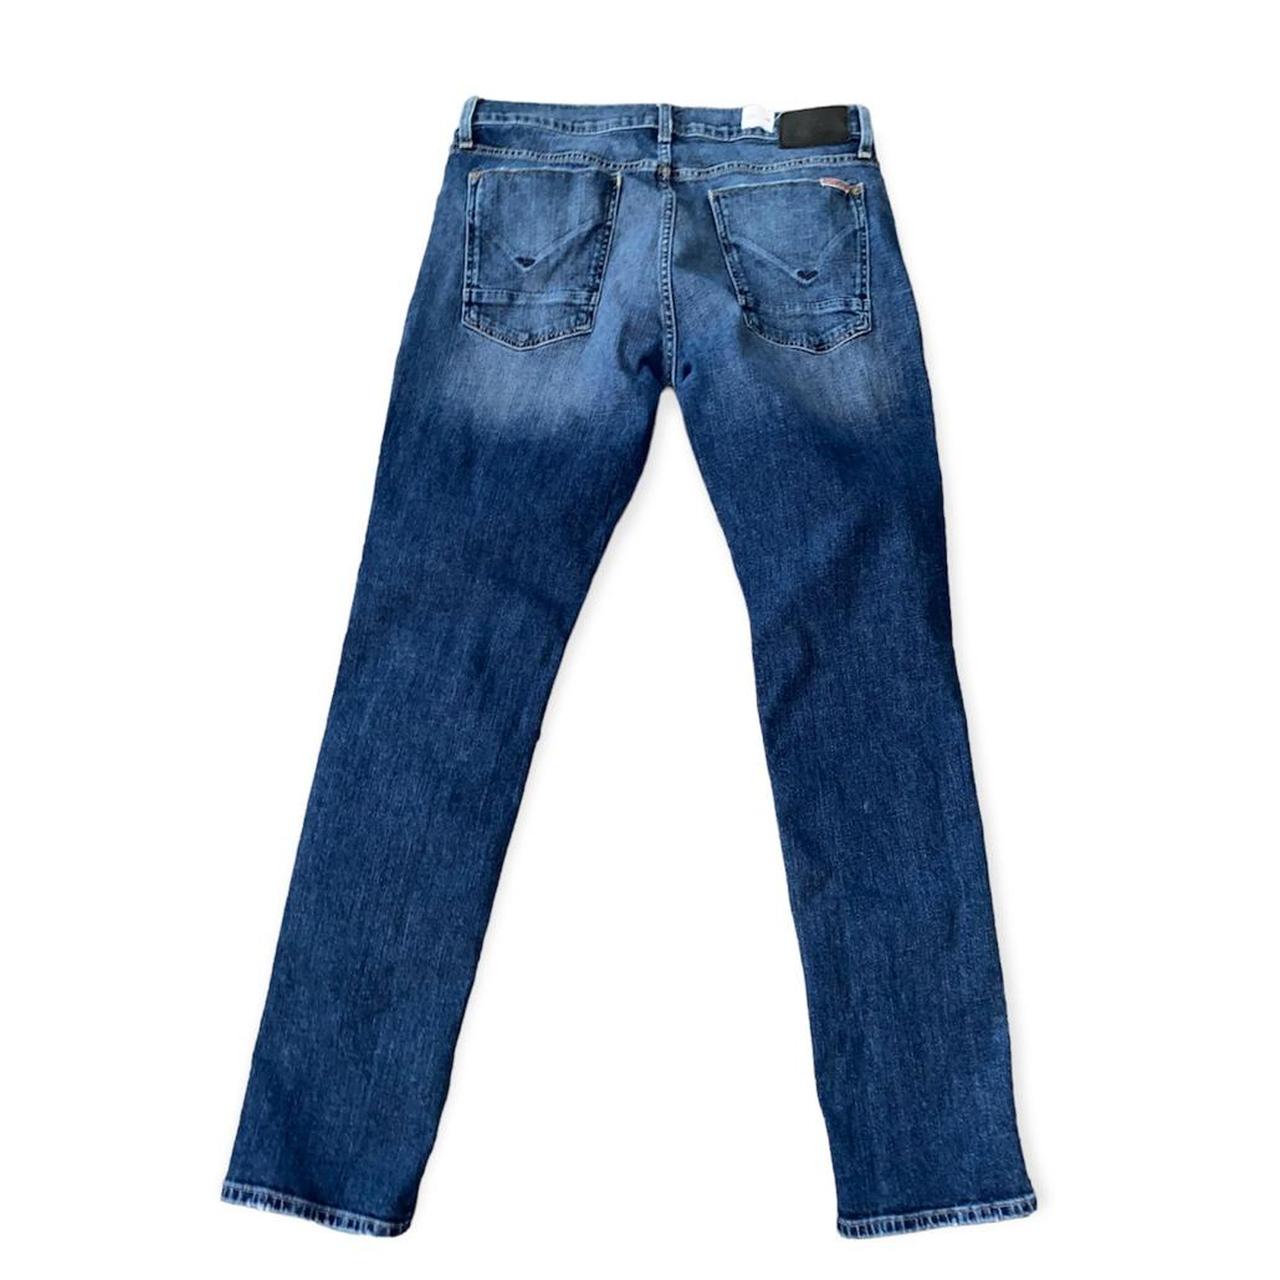 Hudson Jeans Men's Blue and White Jeans (2)